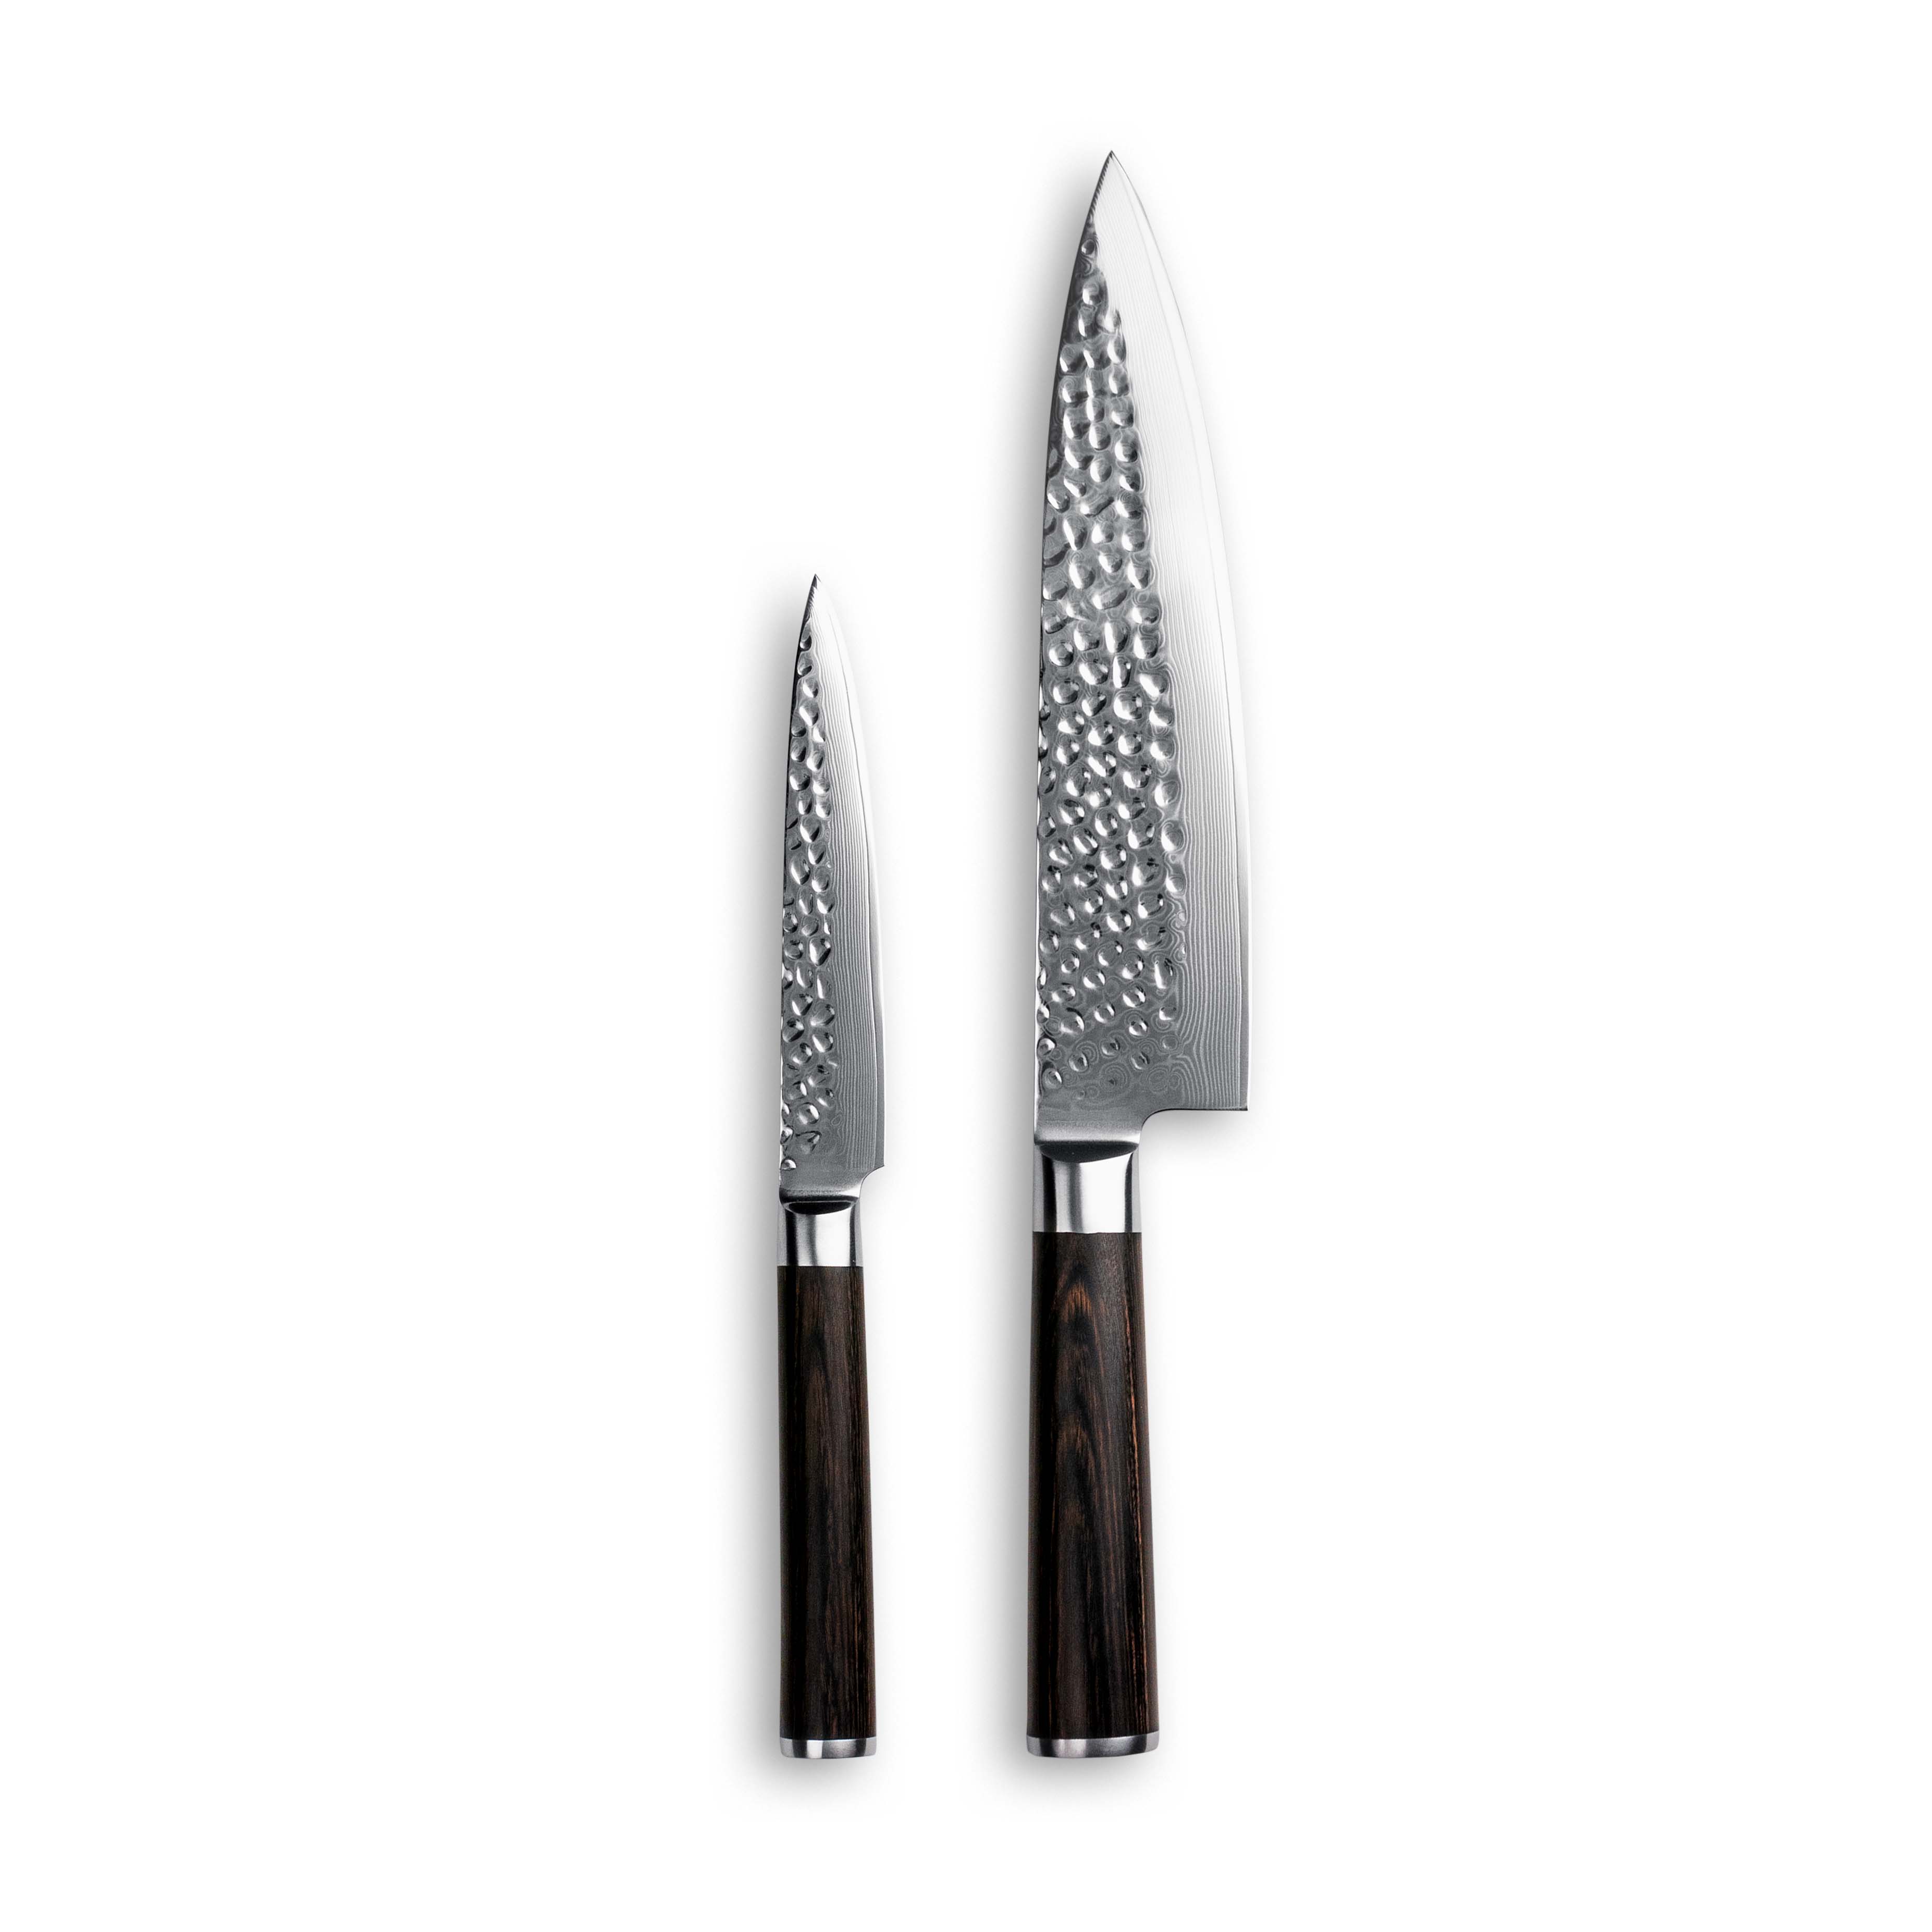 Knivsæt med to knive i 67 lags stål